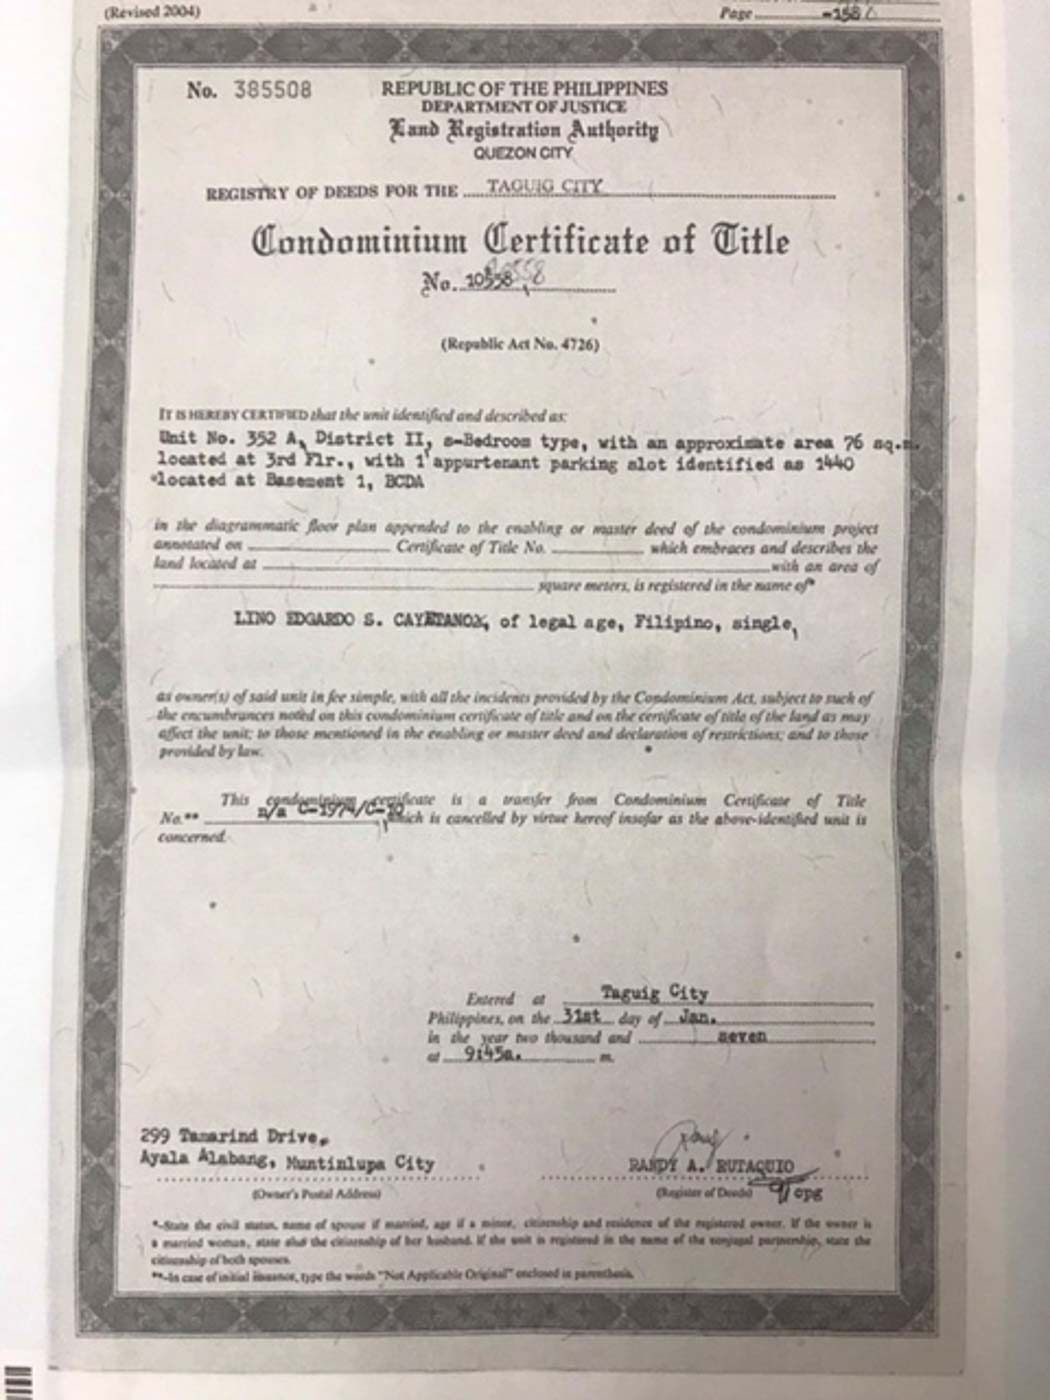 NEW EVIDENCE. Lino Cayetano's Condomium Certificate of Title. Rappler photo 